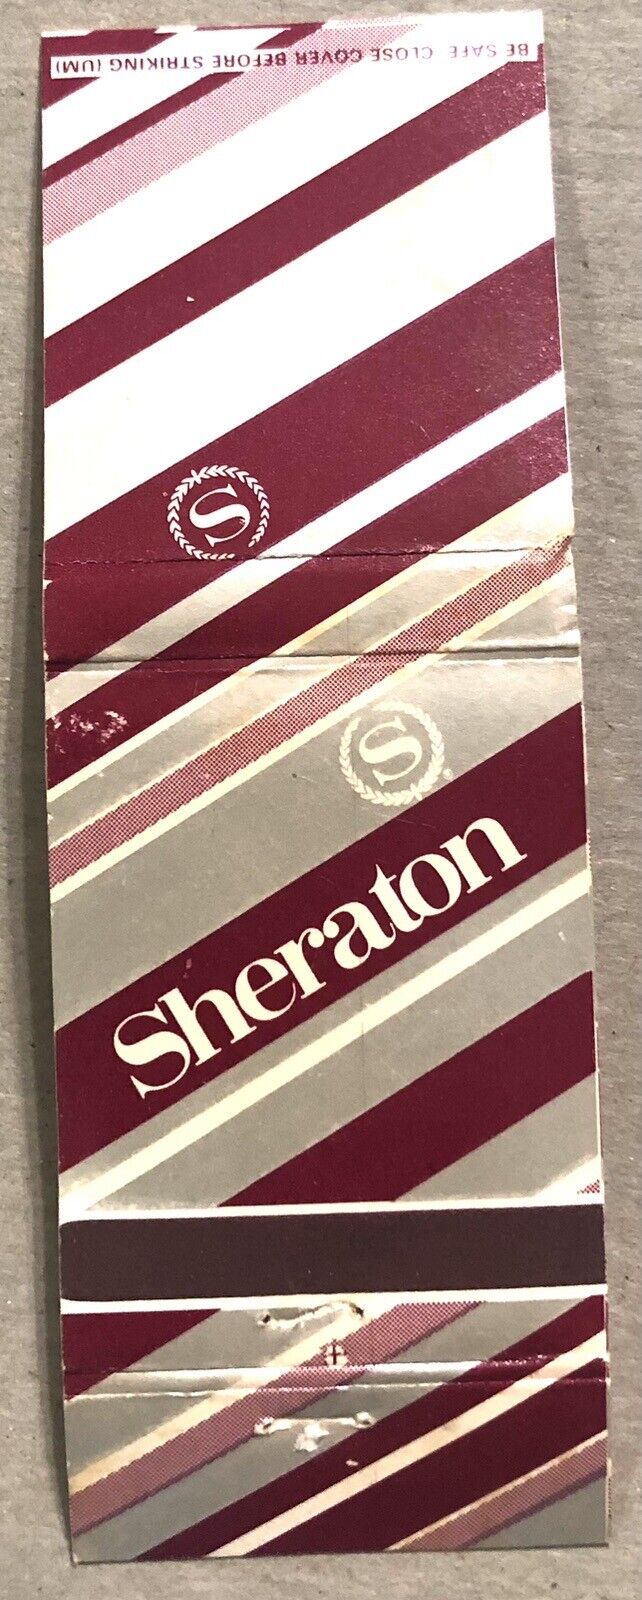 Vintage 20 Strike Matchbook Cover - Sheraton Hotels Candy Stripe Version    B.